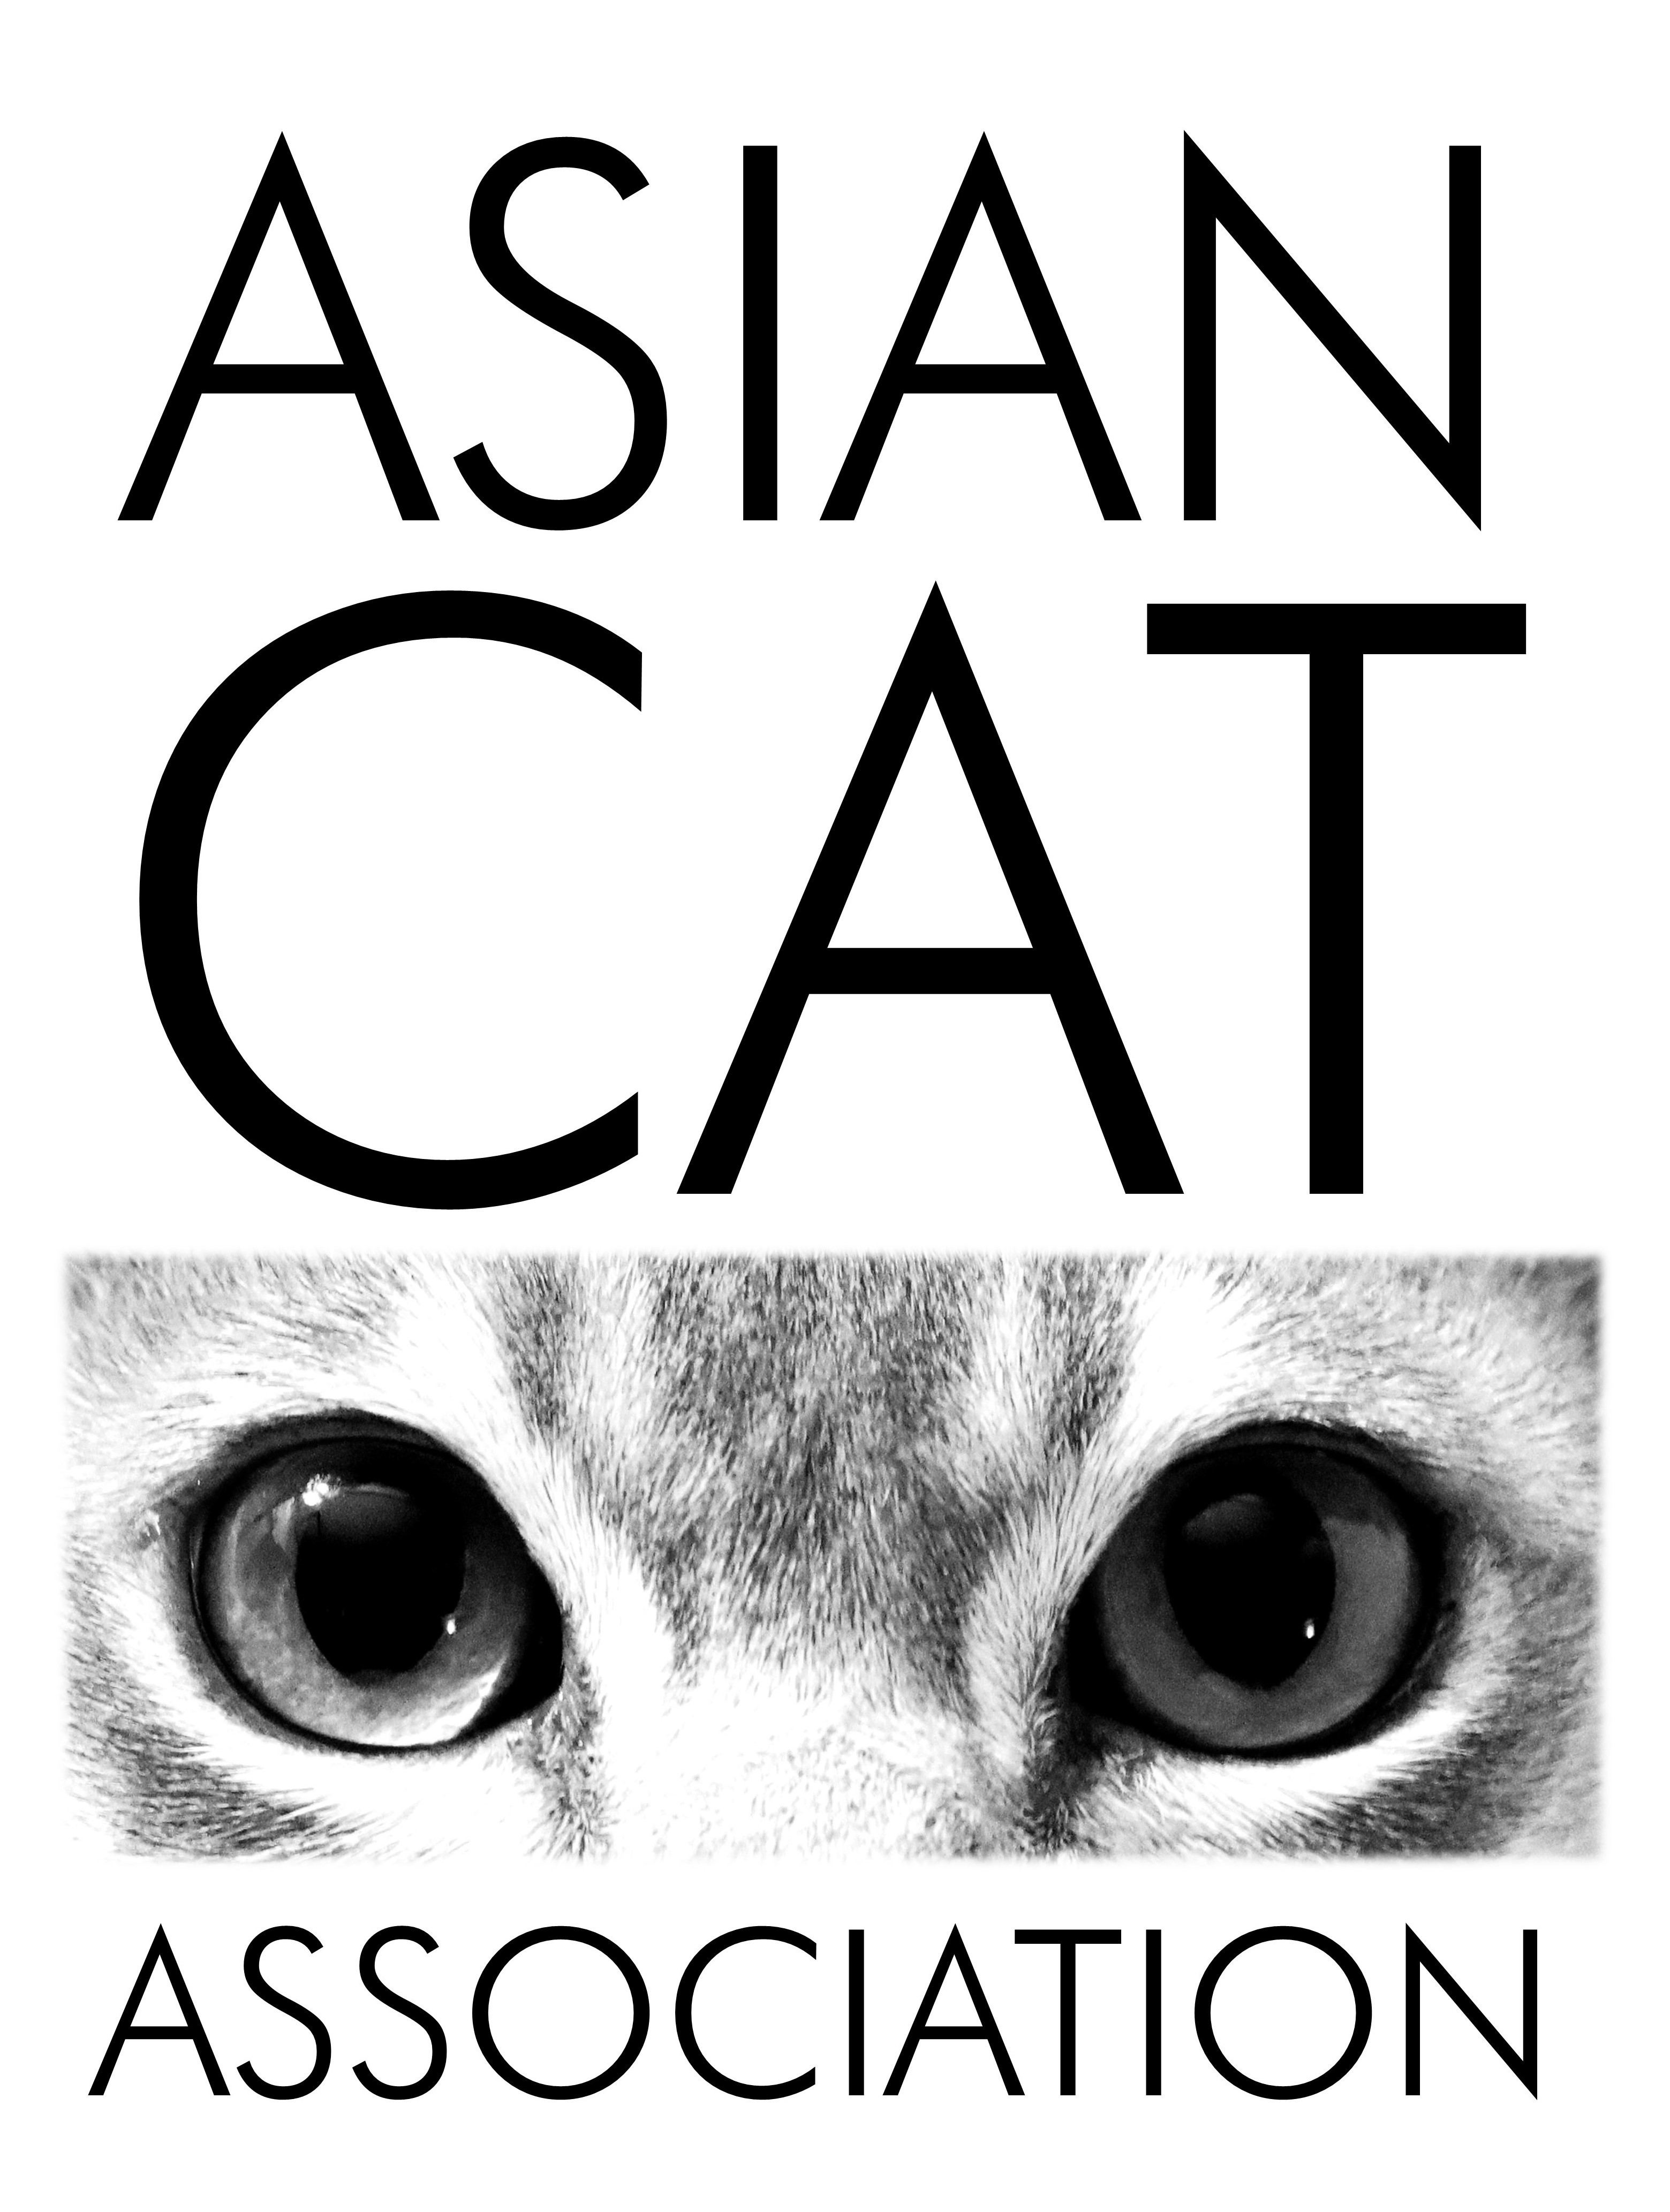 The Asian Cat Association